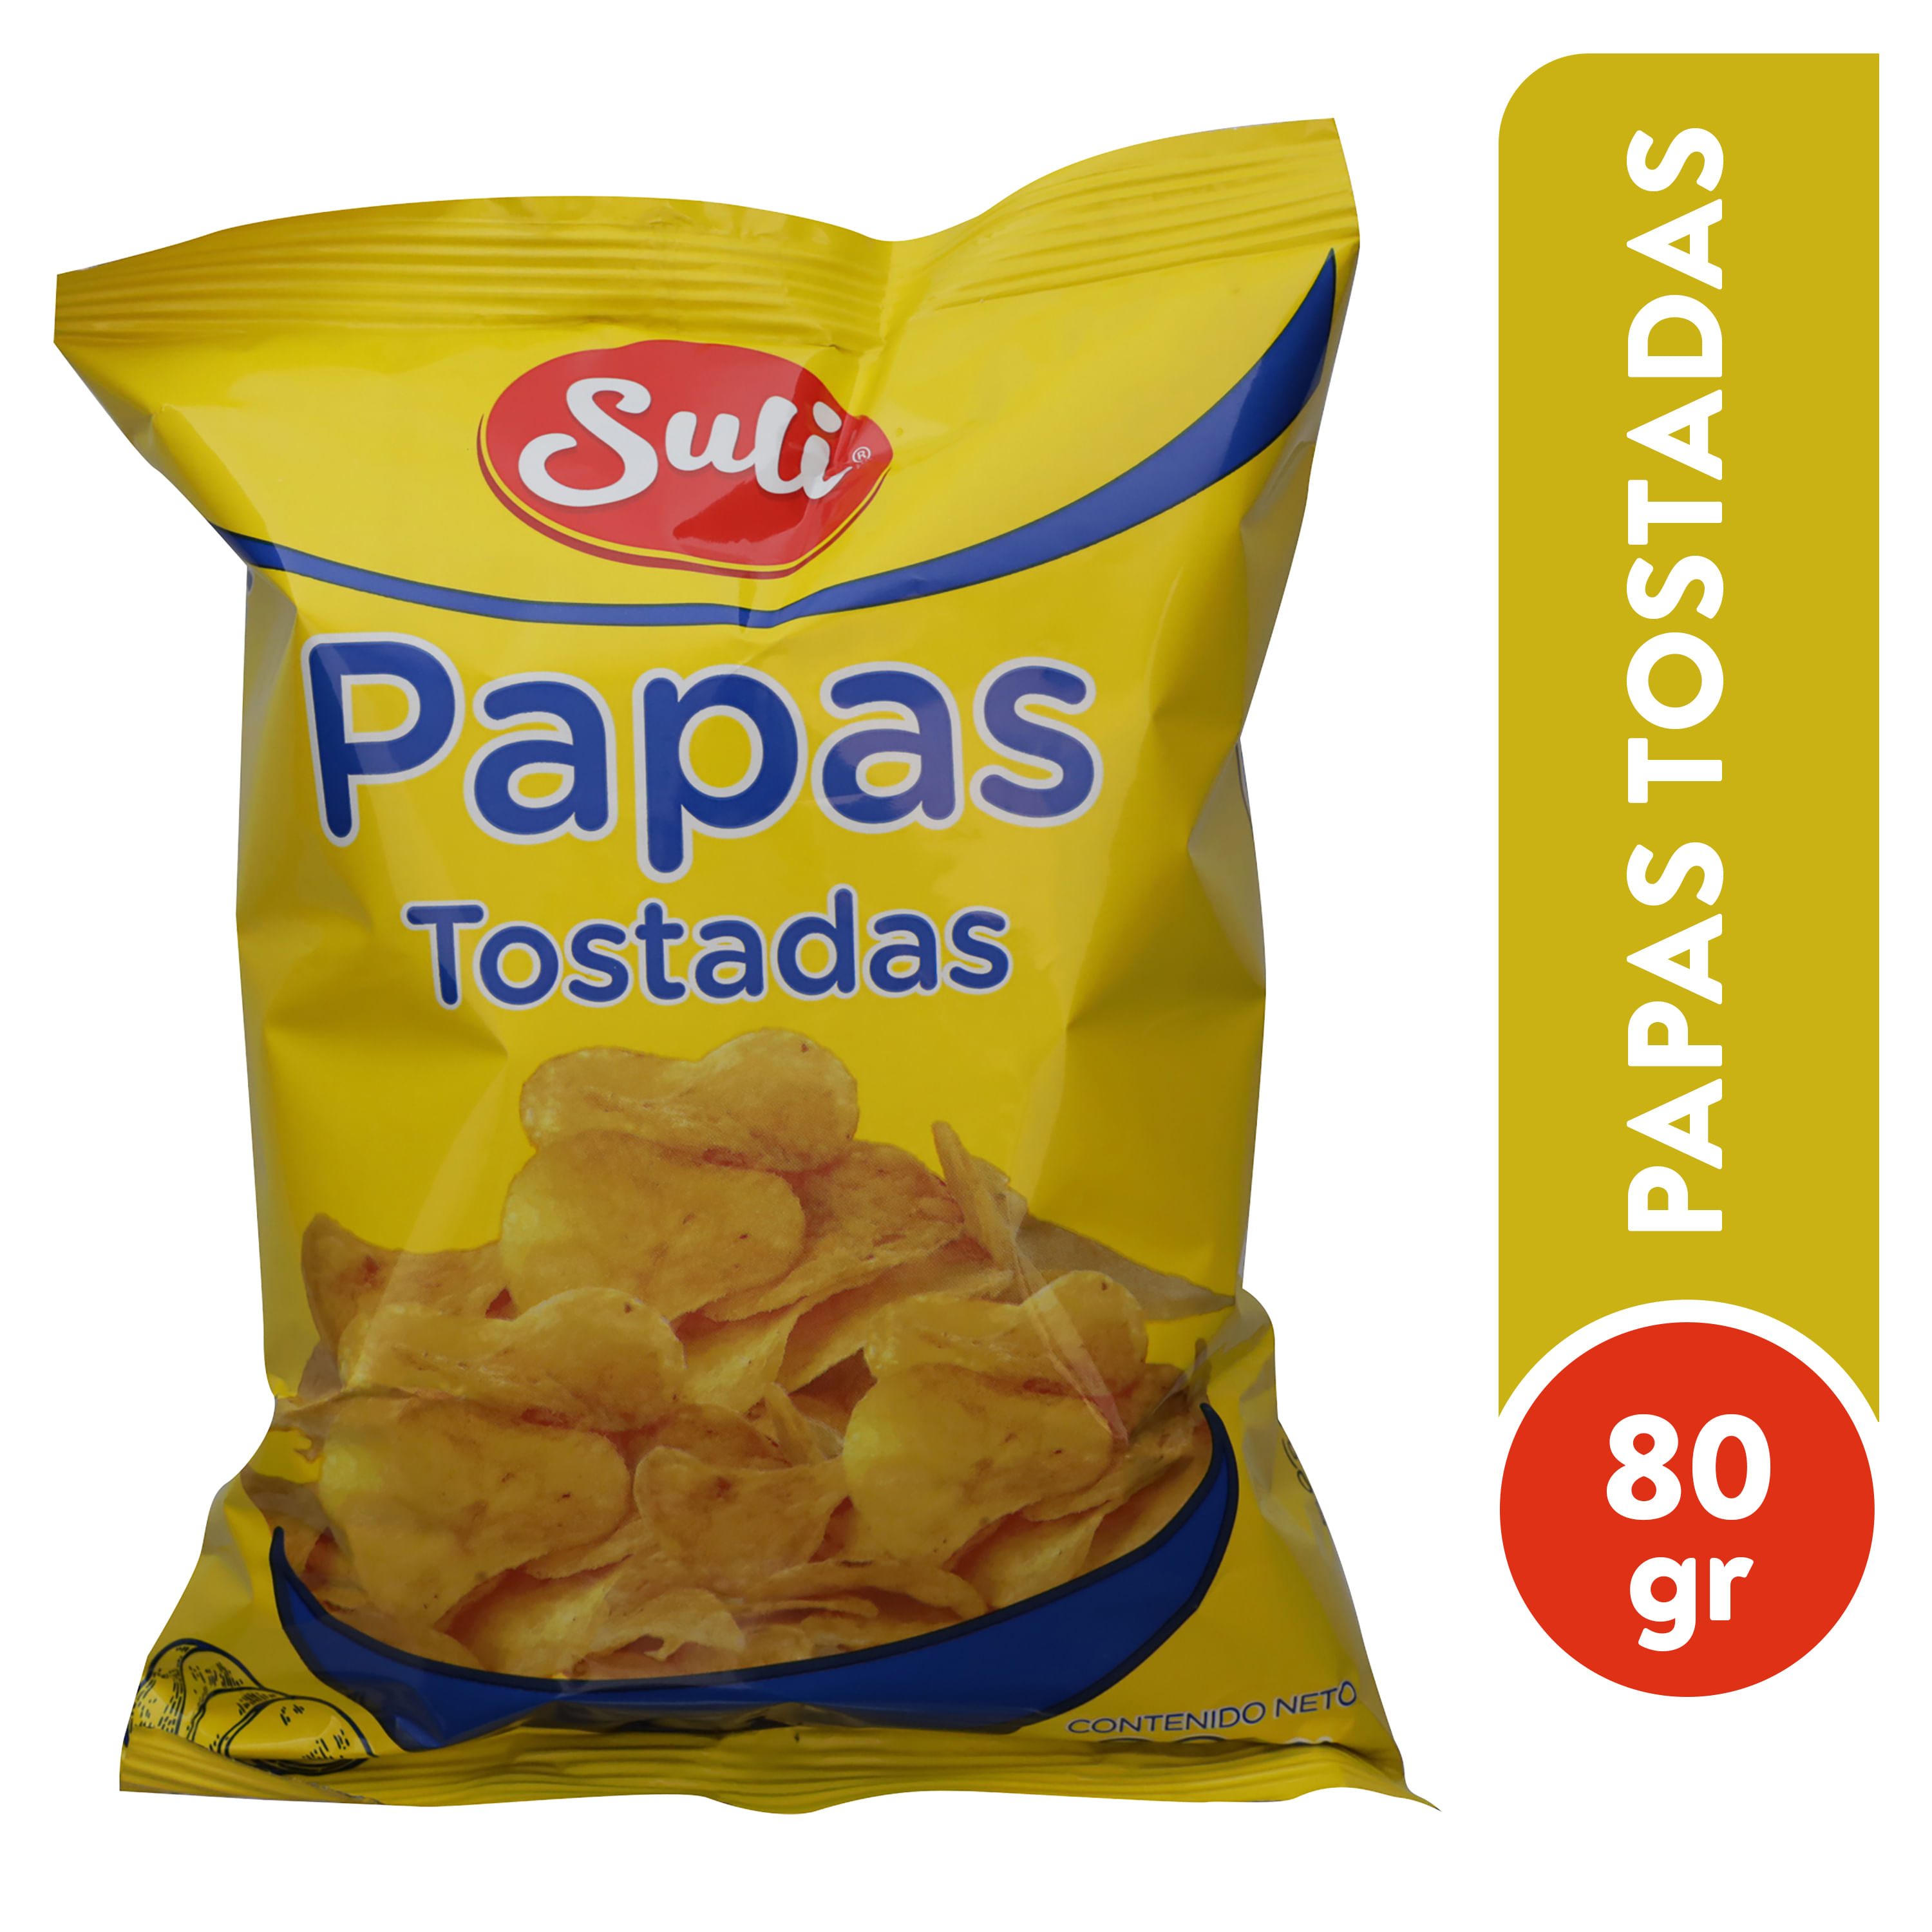 Snack-Suli-Papas-Tostadas-80gr-1-82799